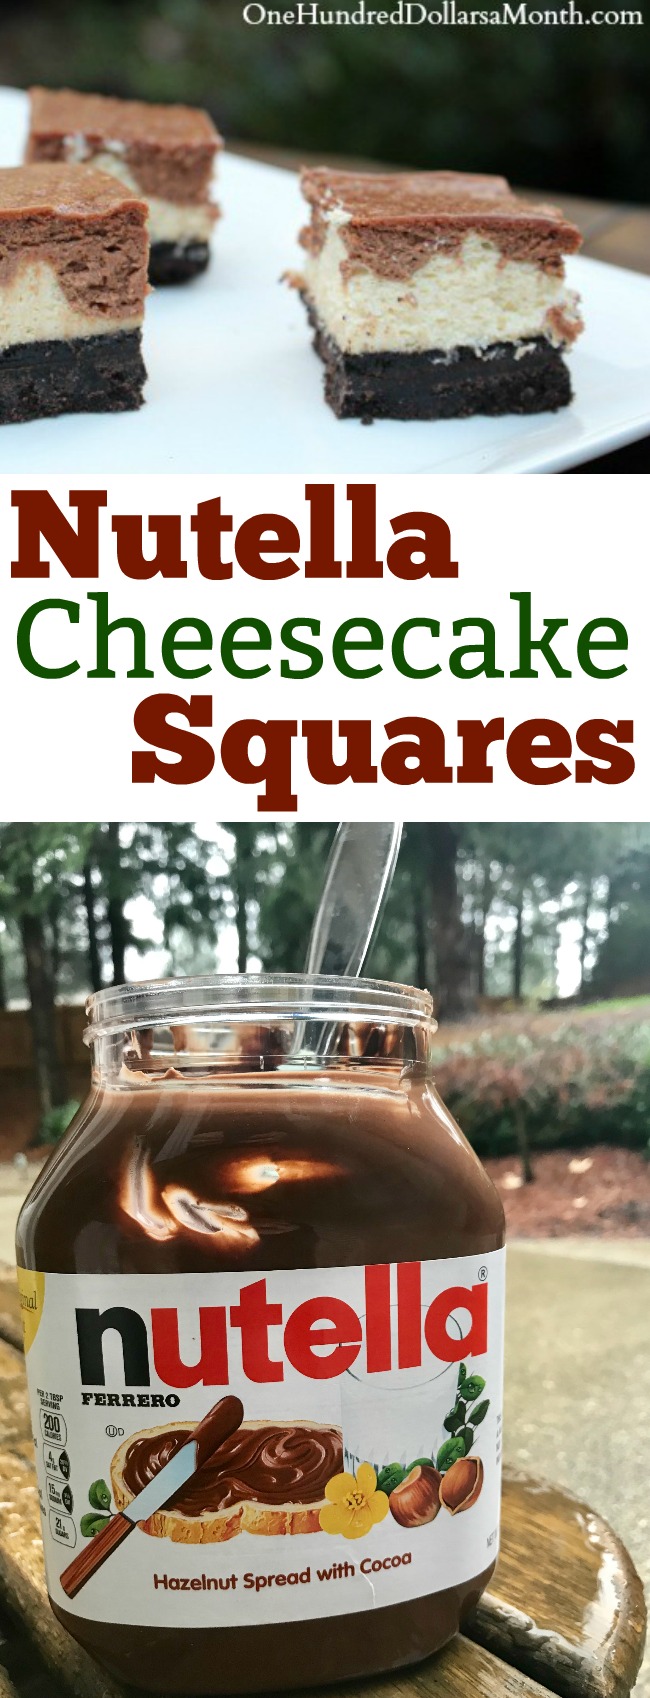 Nutella Cheesecake Squares